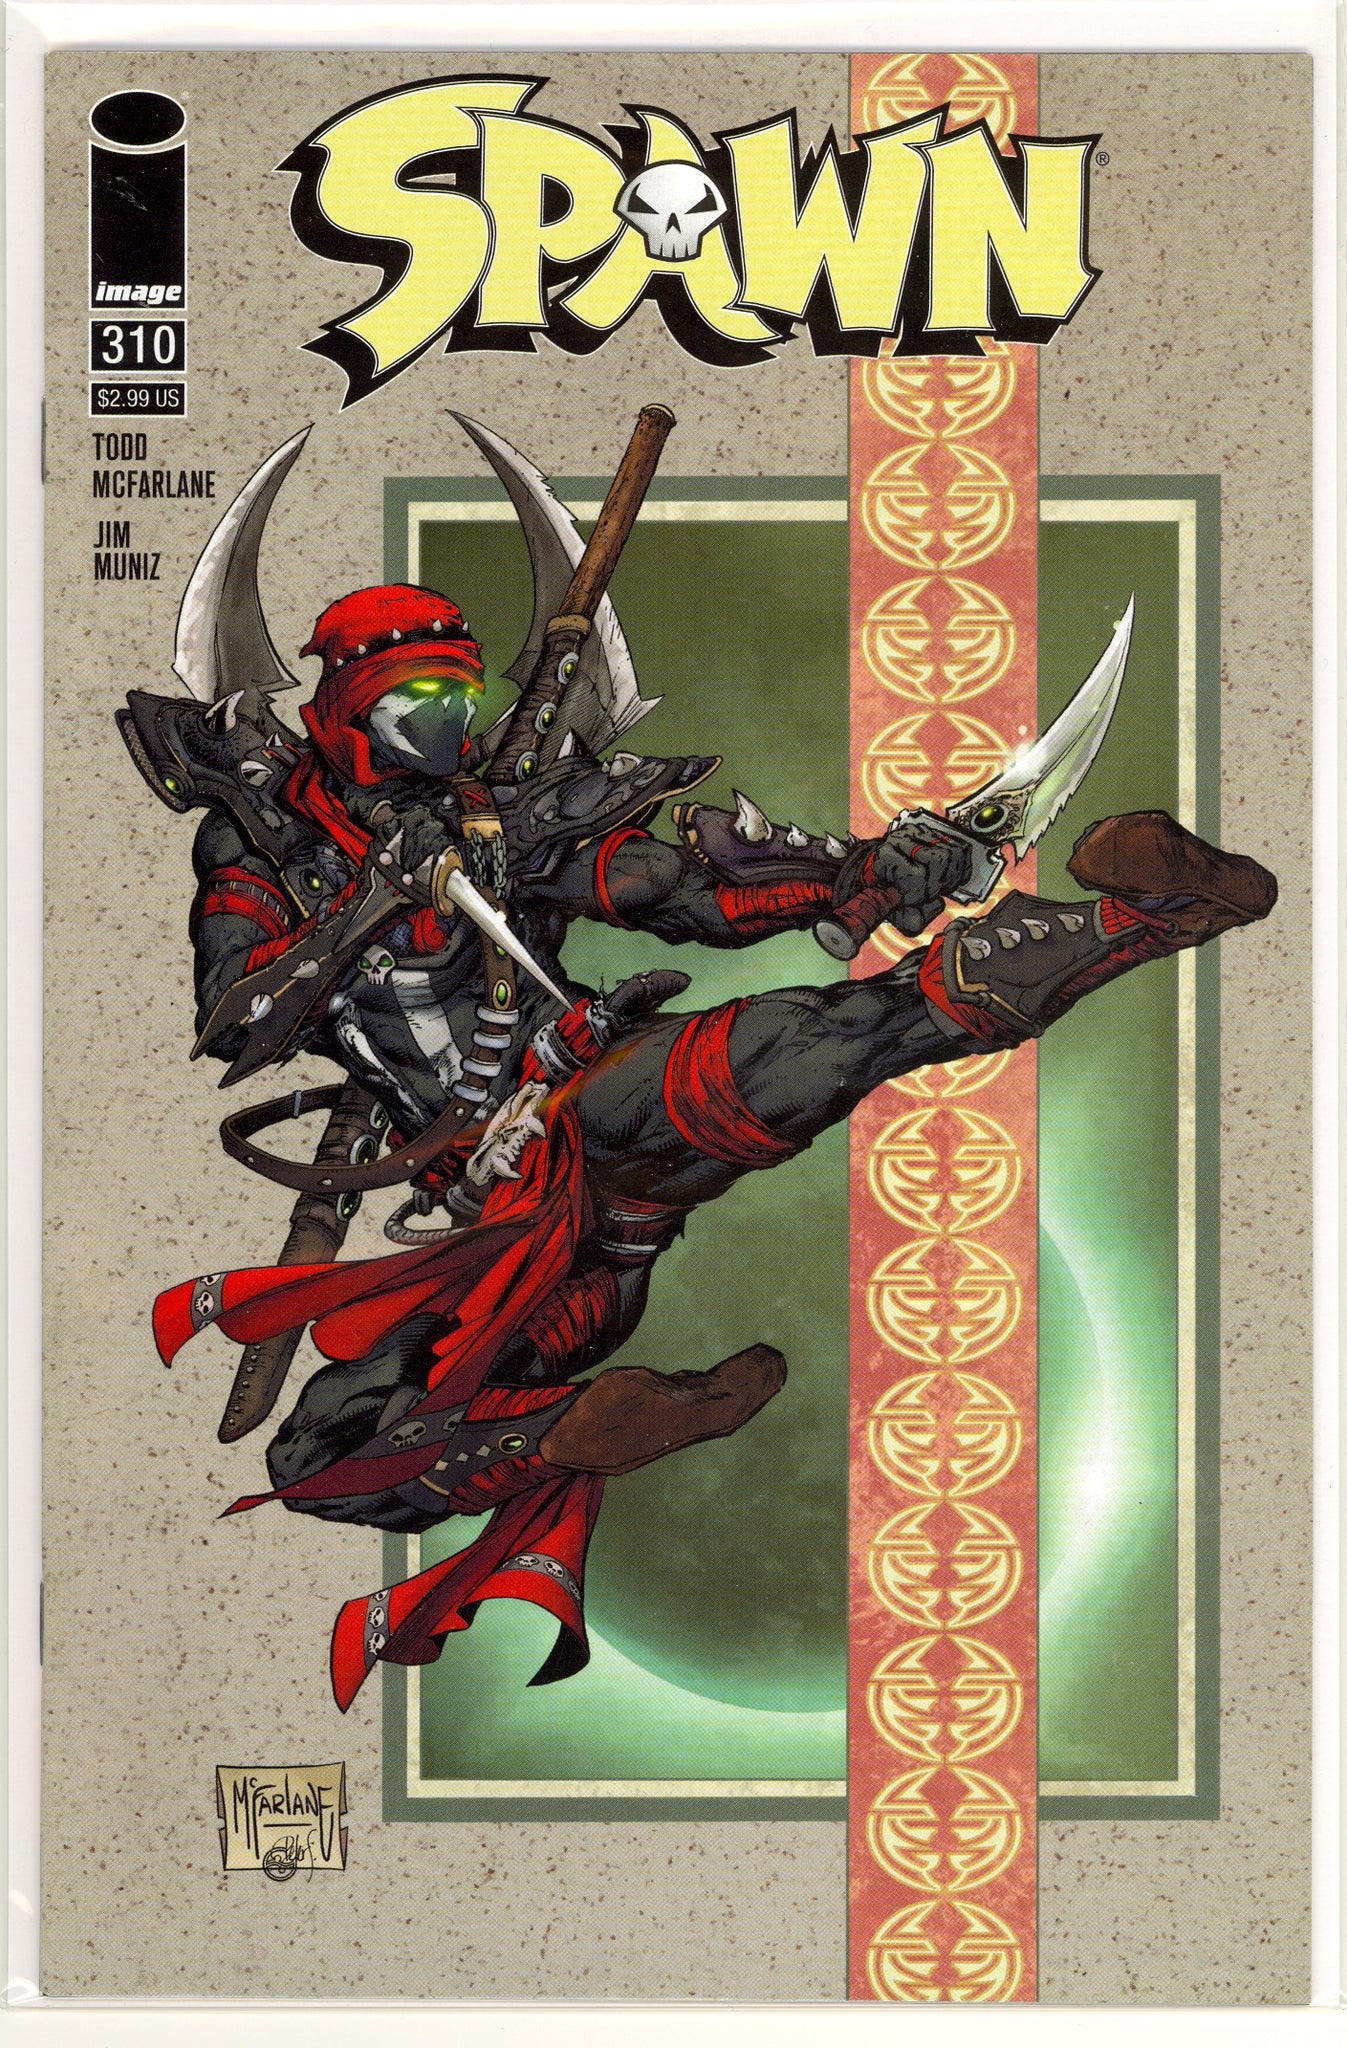 Spawn #310 (2020) Todd McFarlane variant cover